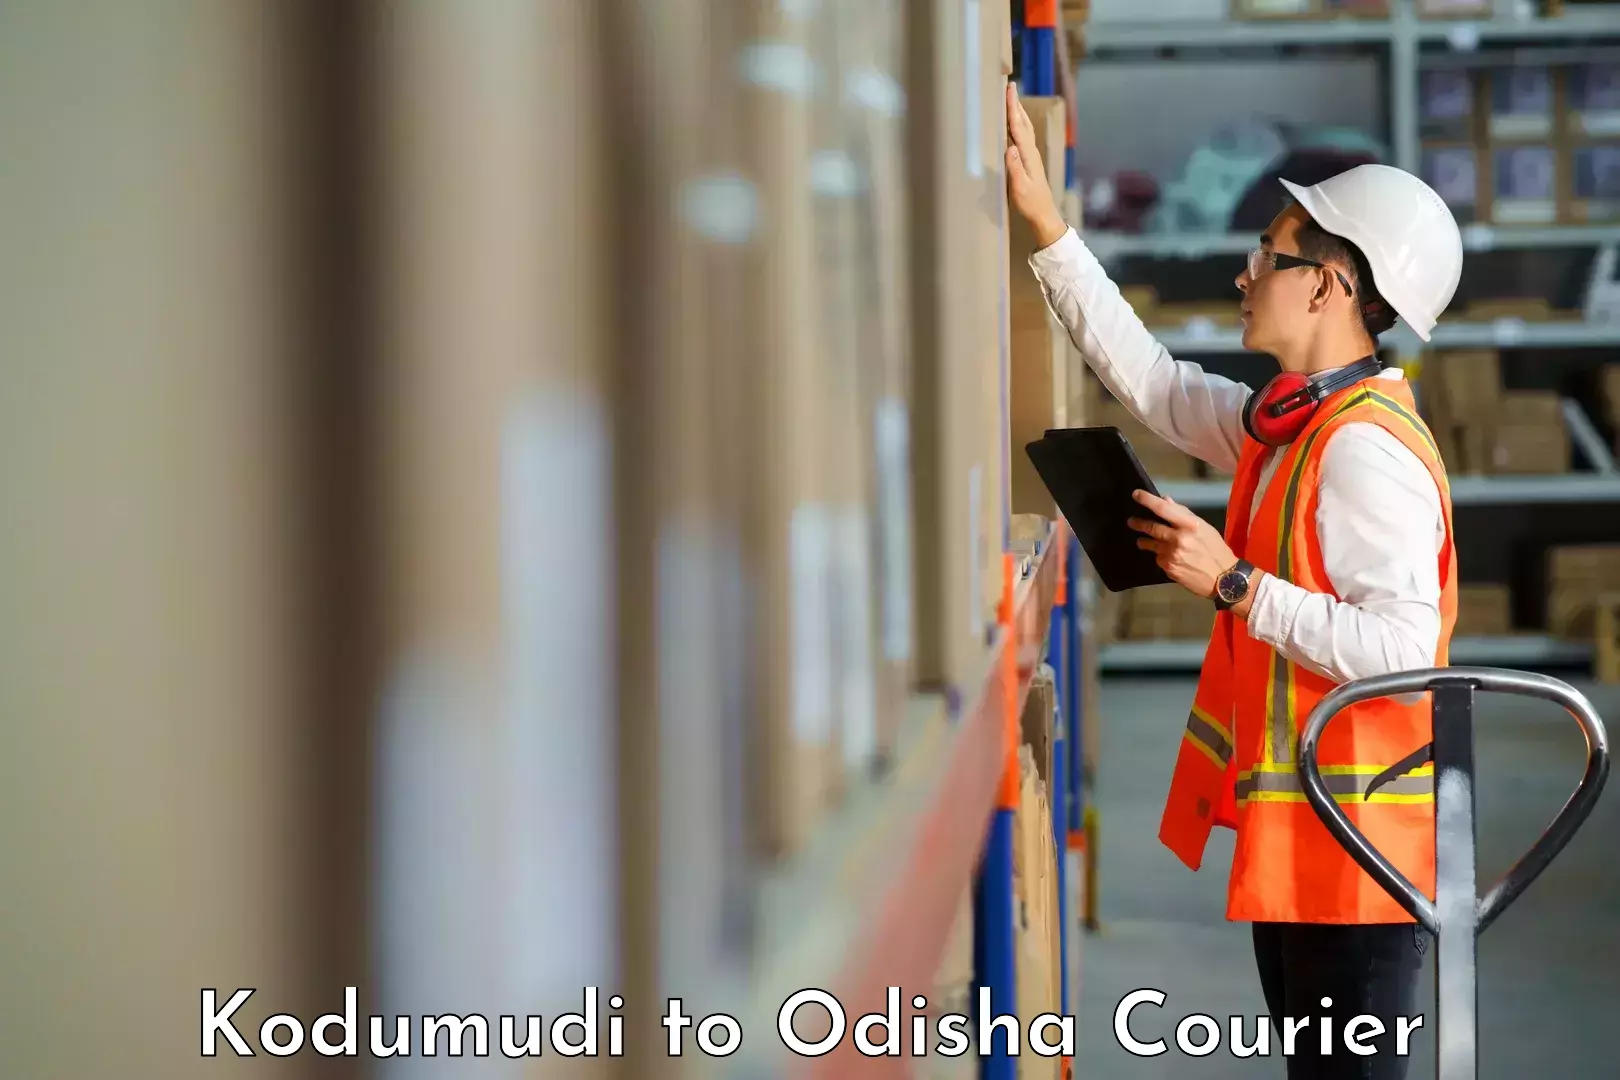 Premium courier services in Kodumudi to Bhubaneswar